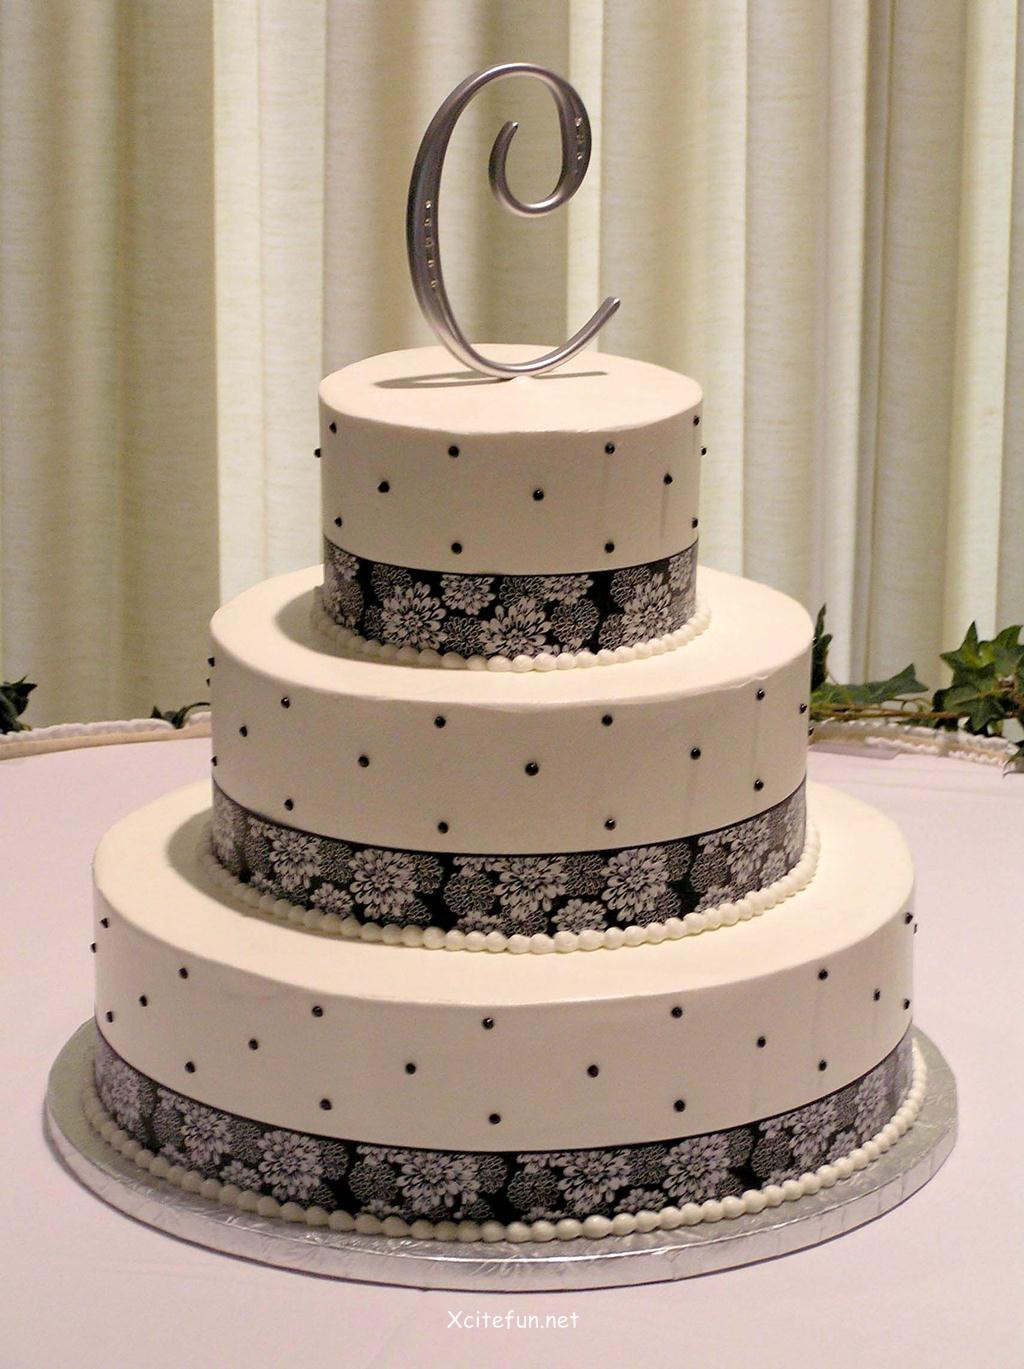 How To Decorate Wedding Cakes
 Wedding Cakes Decorating Ideas XciteFun